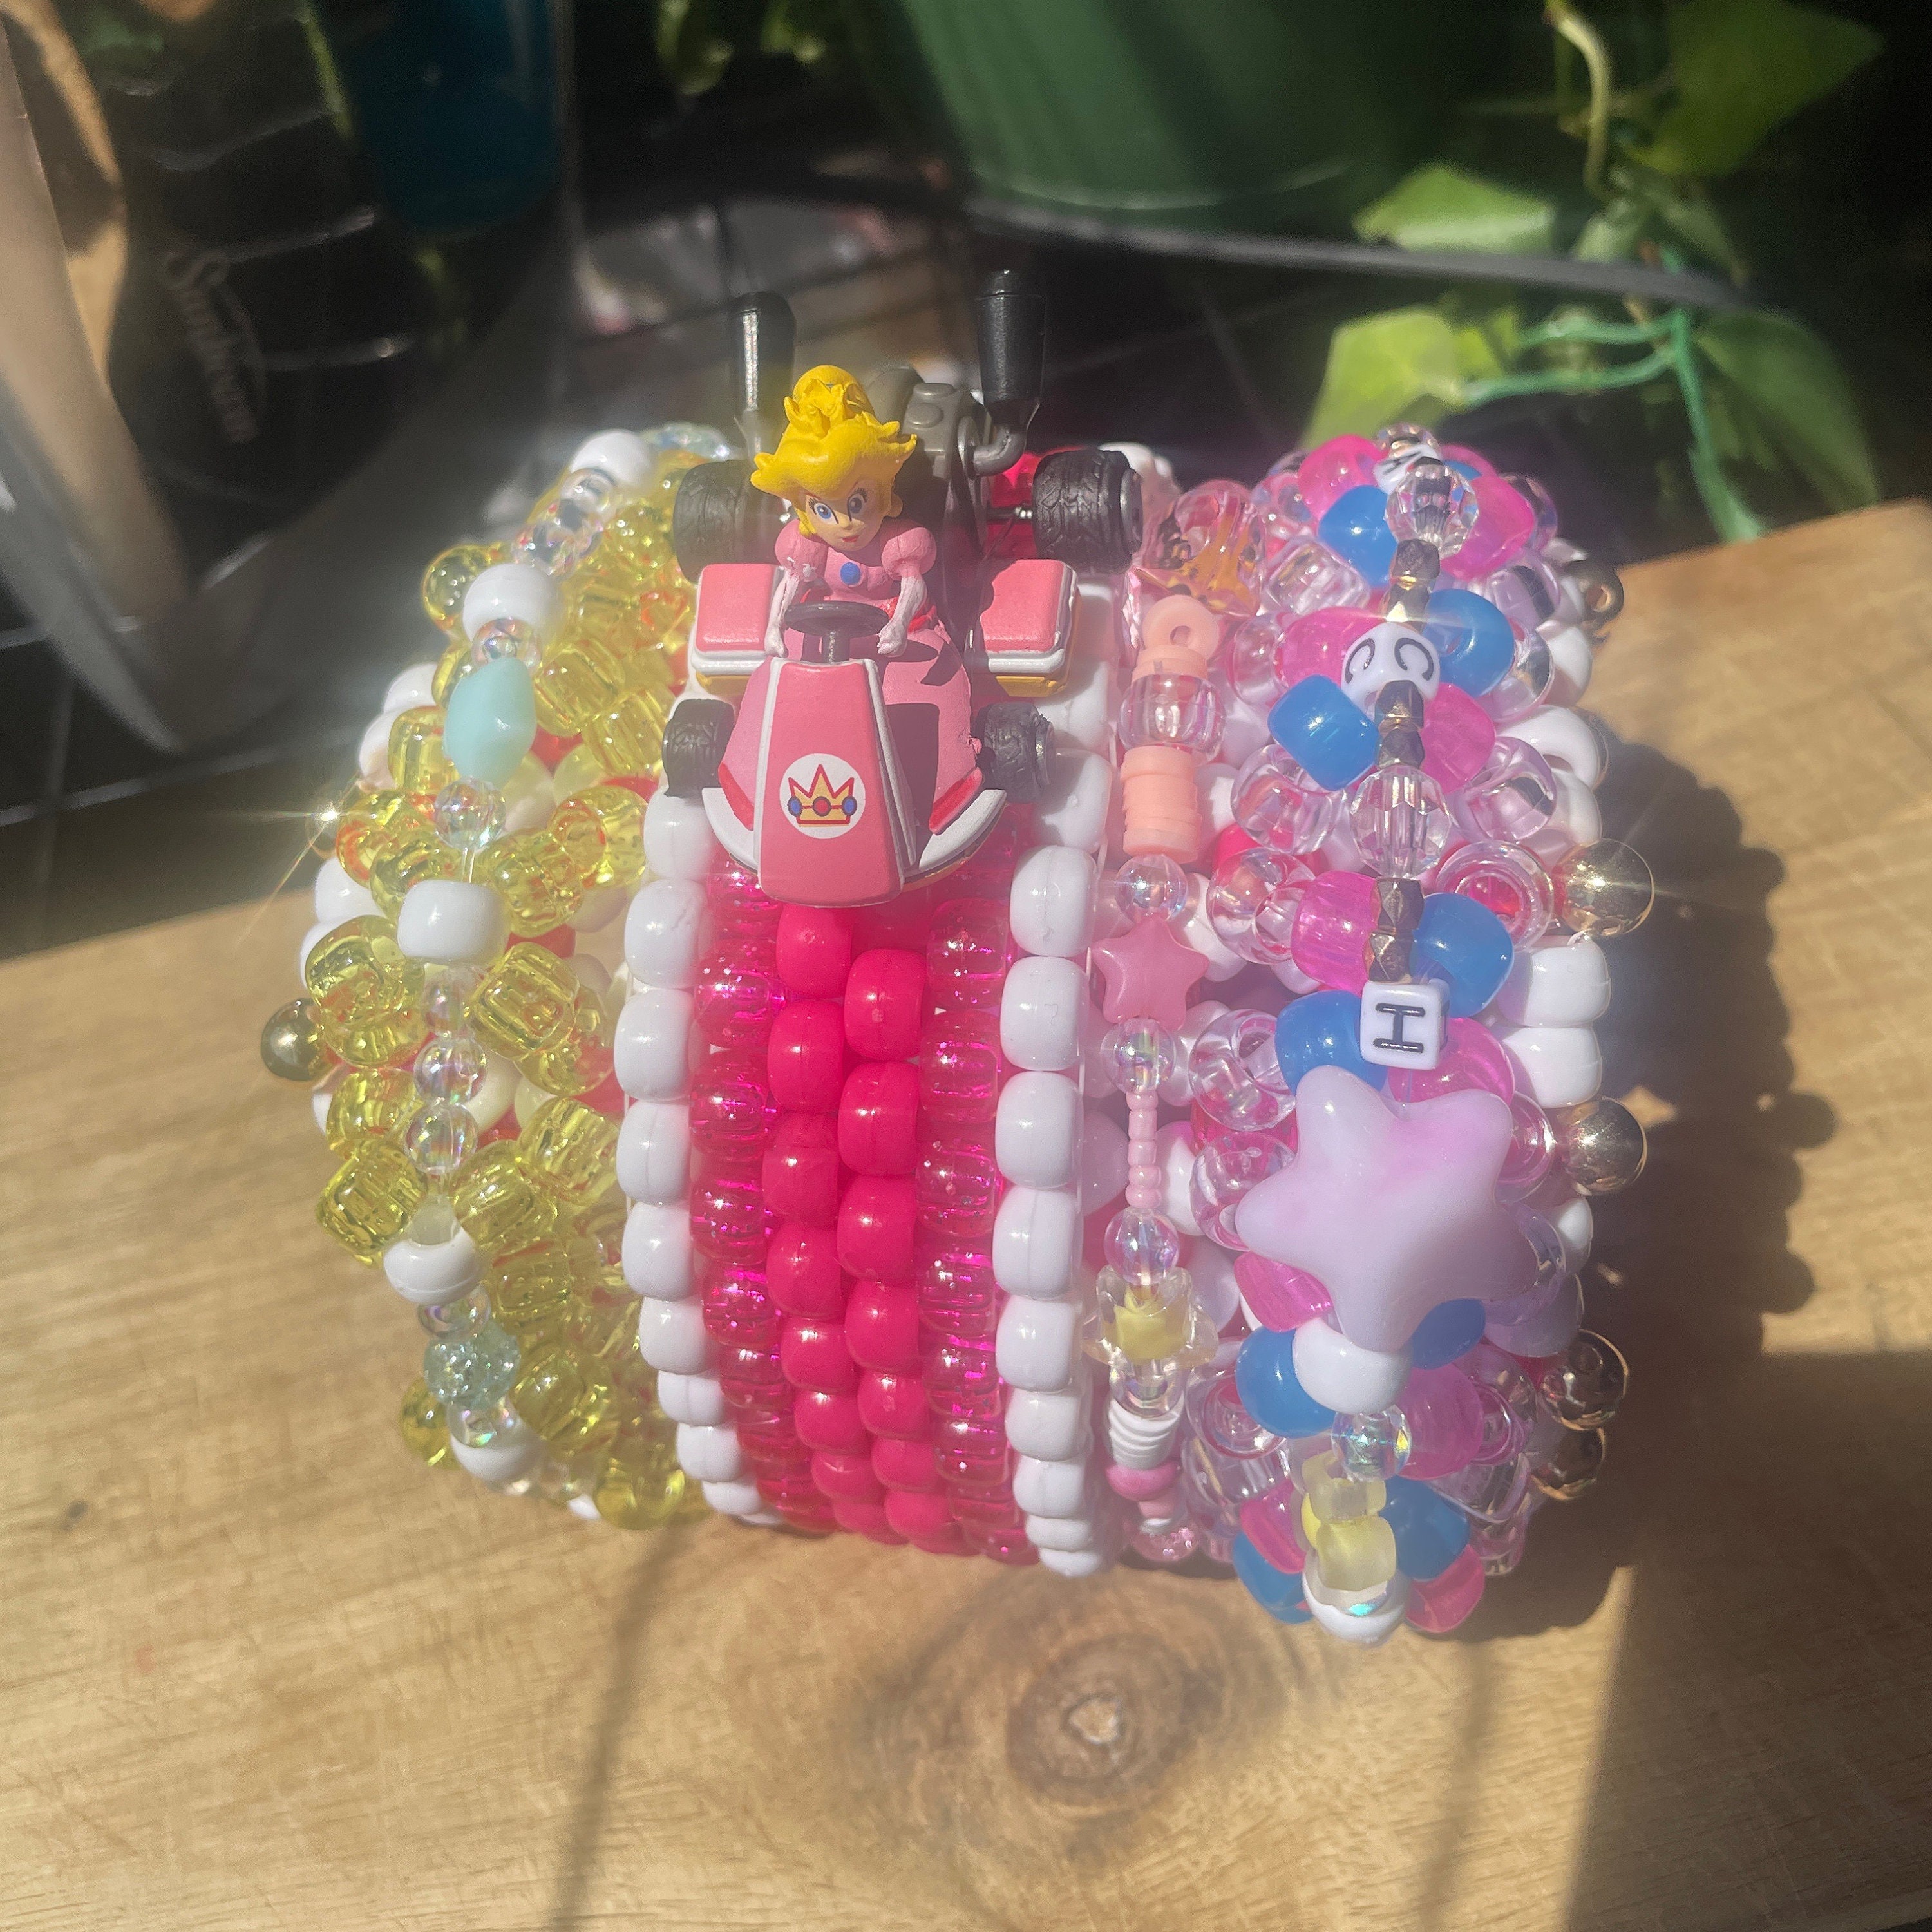 3 Mario Themed Kandi Bracelets, Perler Kandi, Rave Jewelry, Festival Jewelry